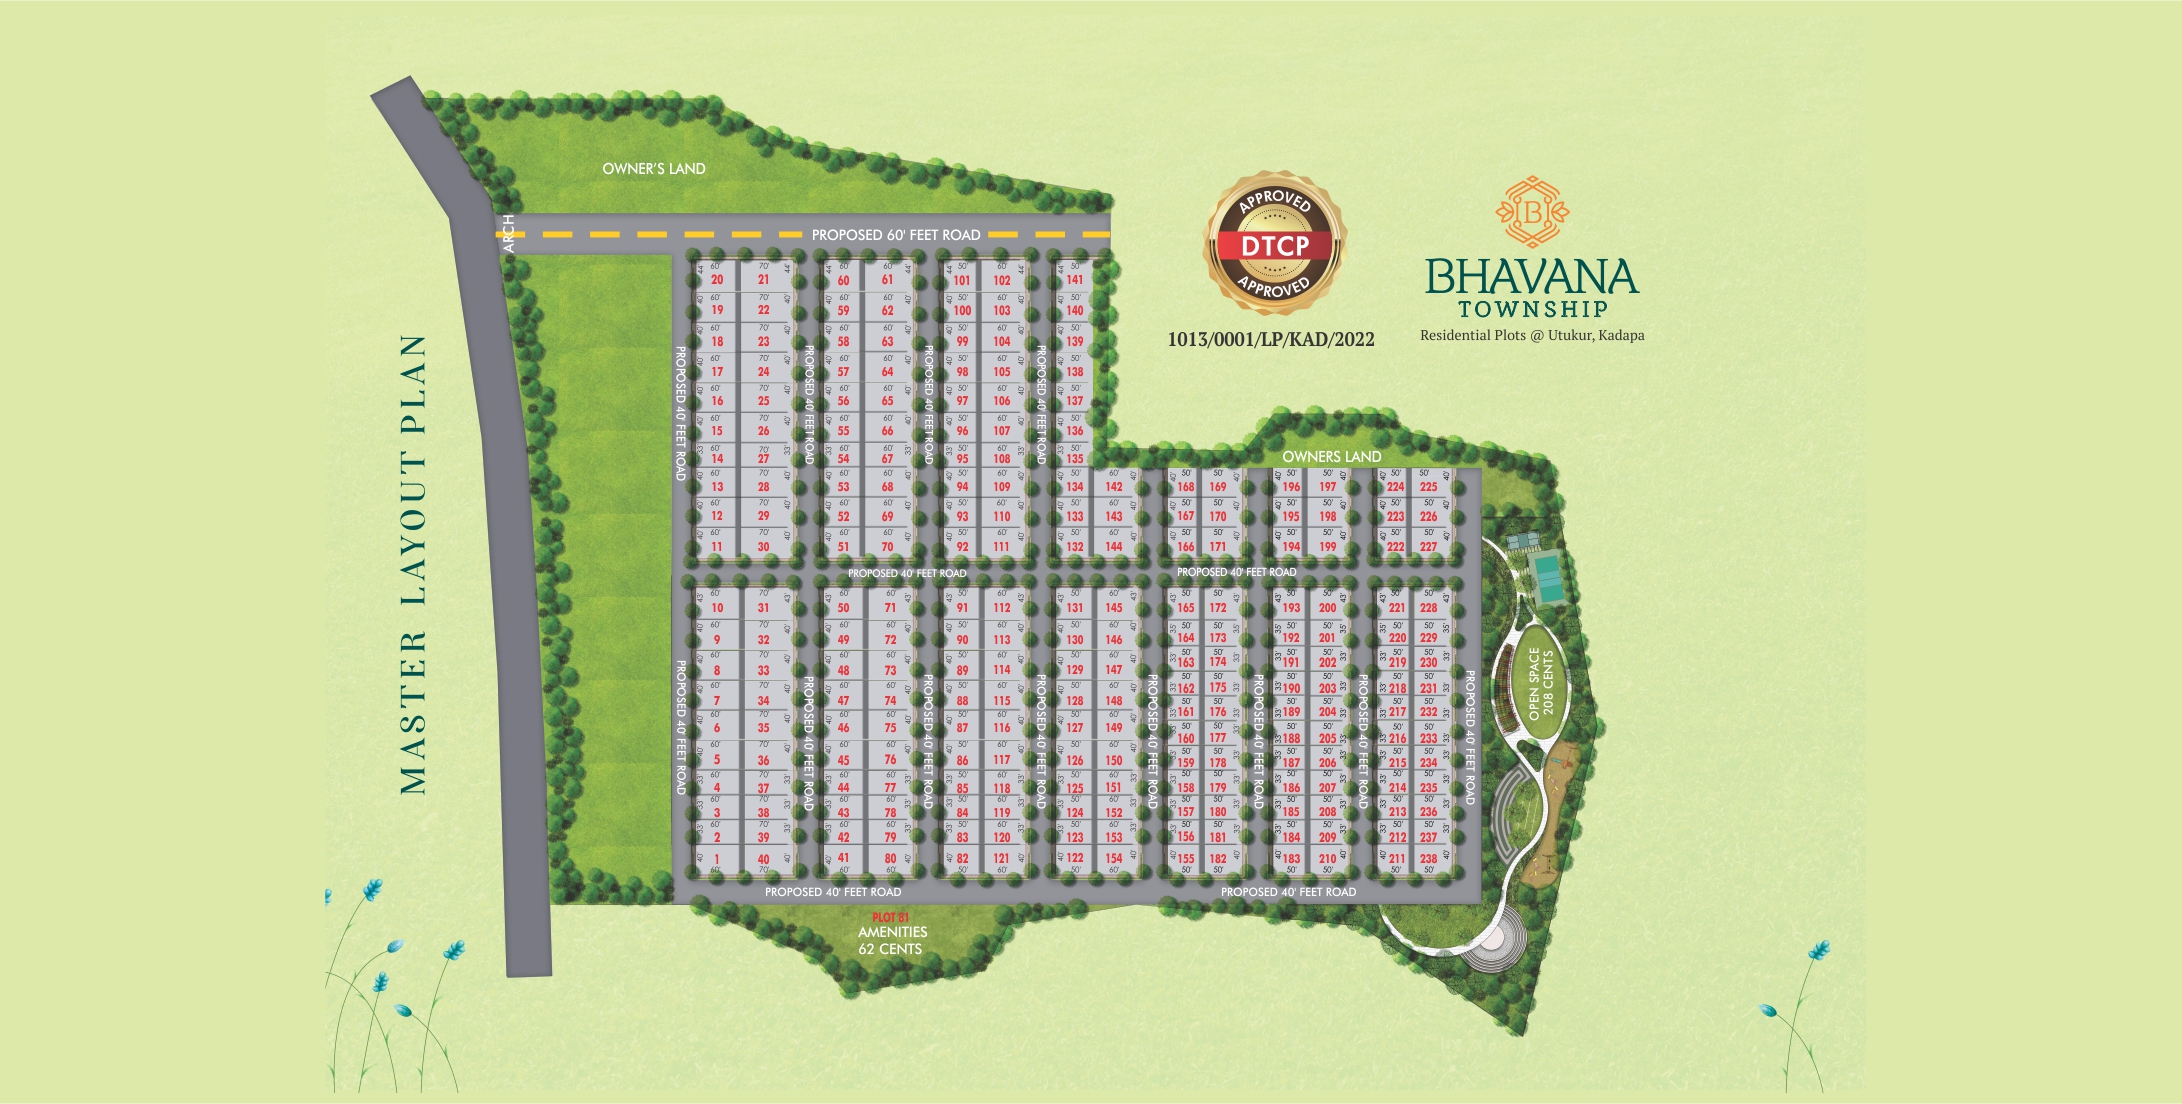 Bhavana township Residential plots kadapa by buddha infra, Residential plots for sale kadapa